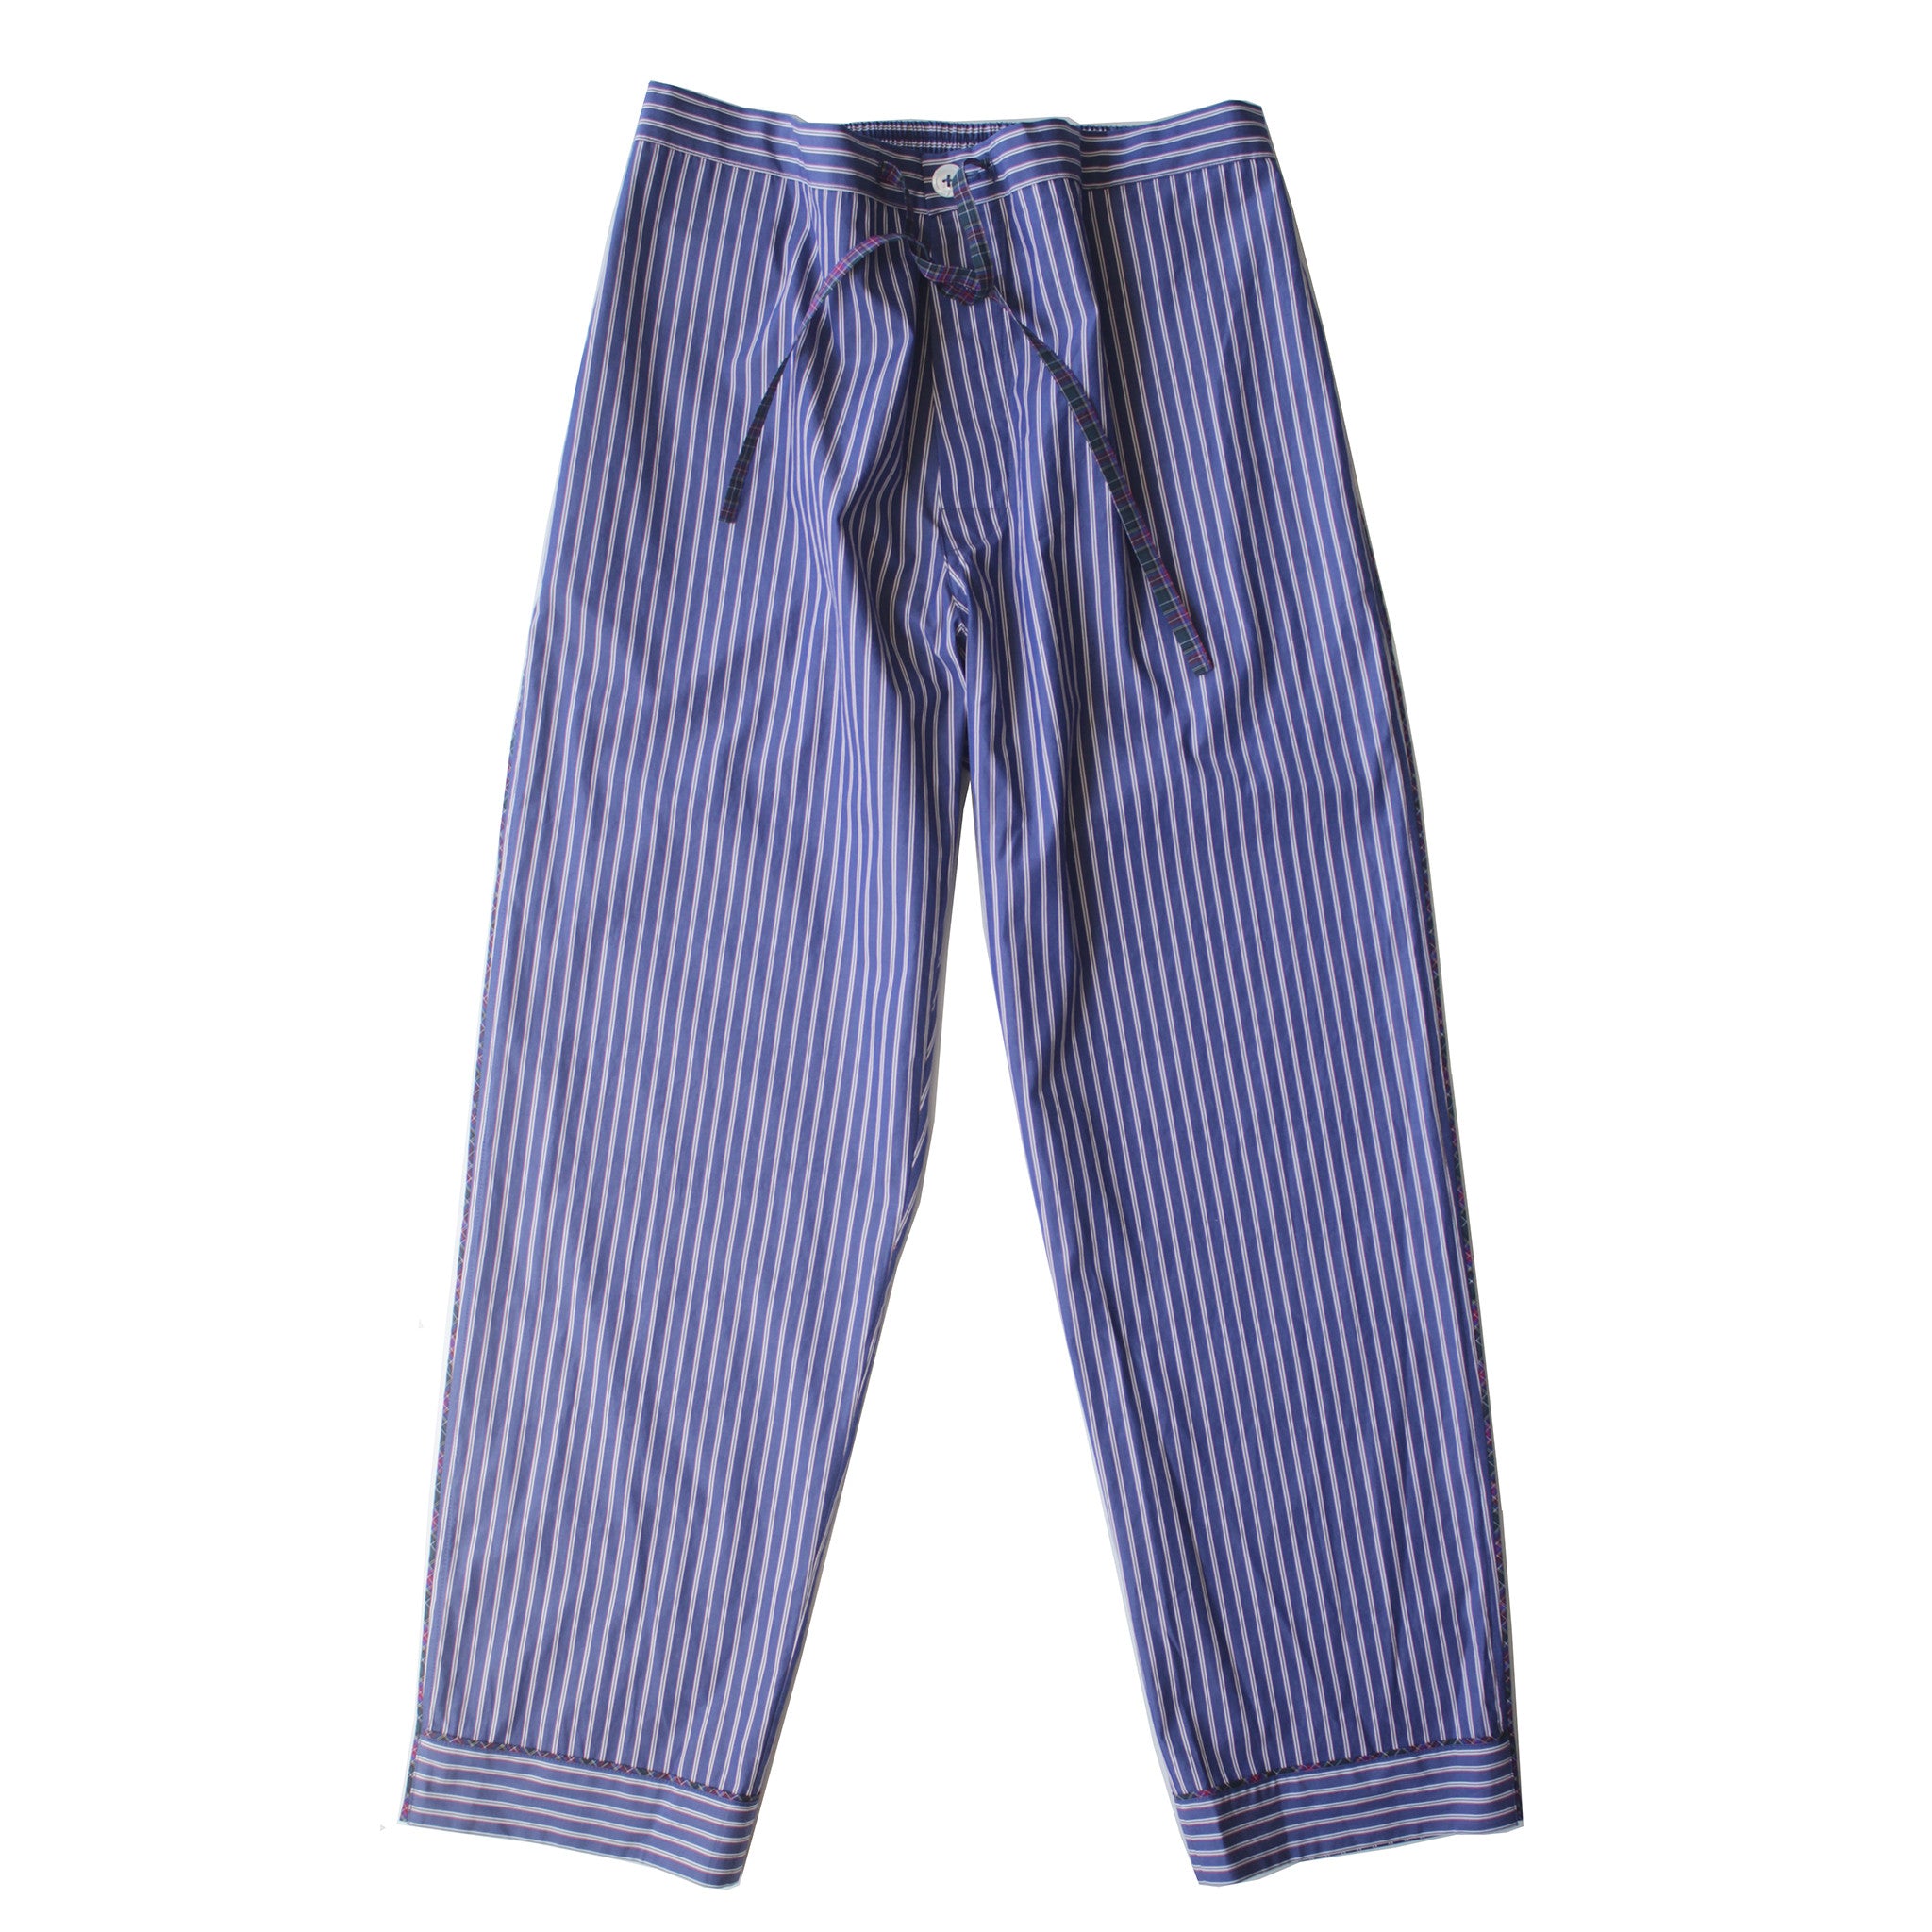 Saturn Pajama Pant in Blue and White Stripe Italian Cotton